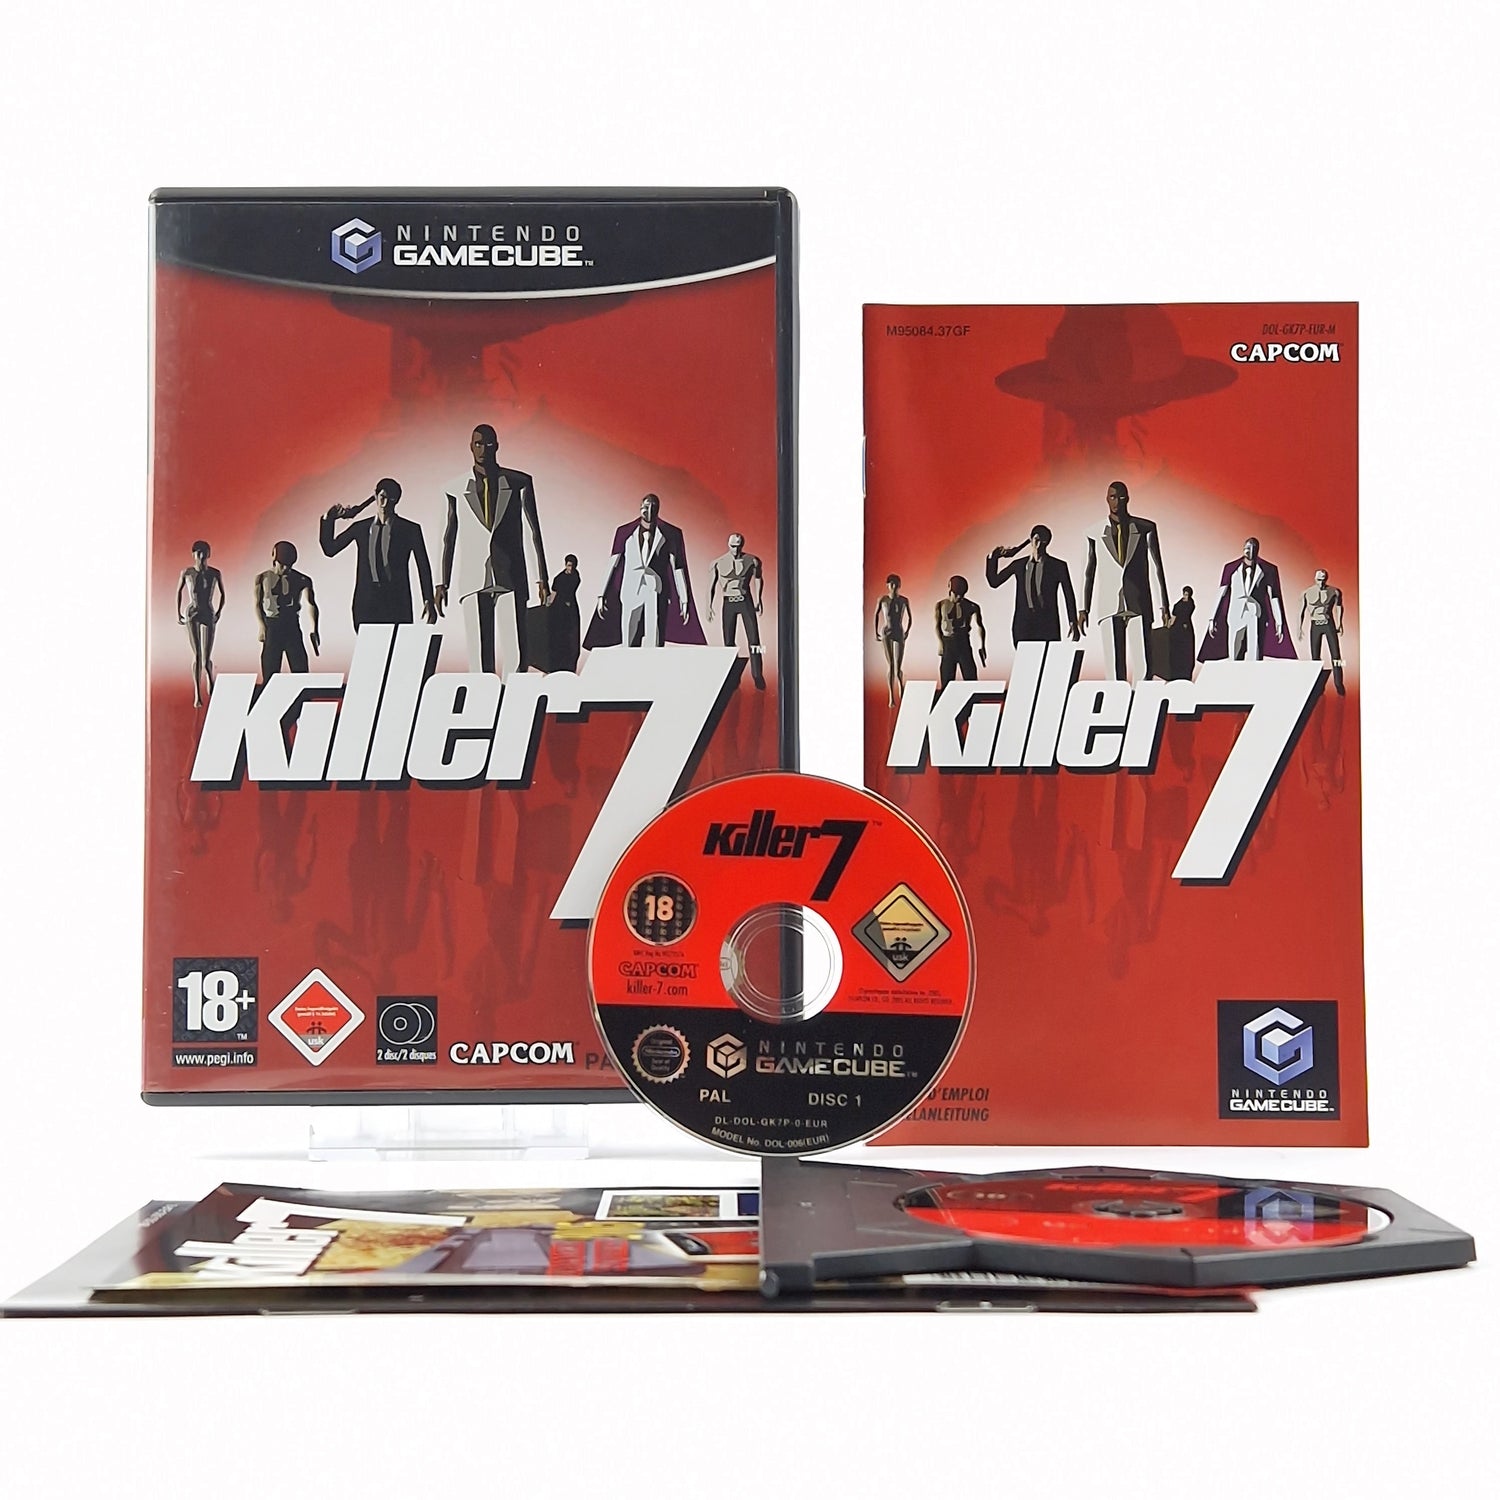 Nintendo Gamecube Spiel : Killer 7 von Capcom - OVP Anleitung PAL USK18